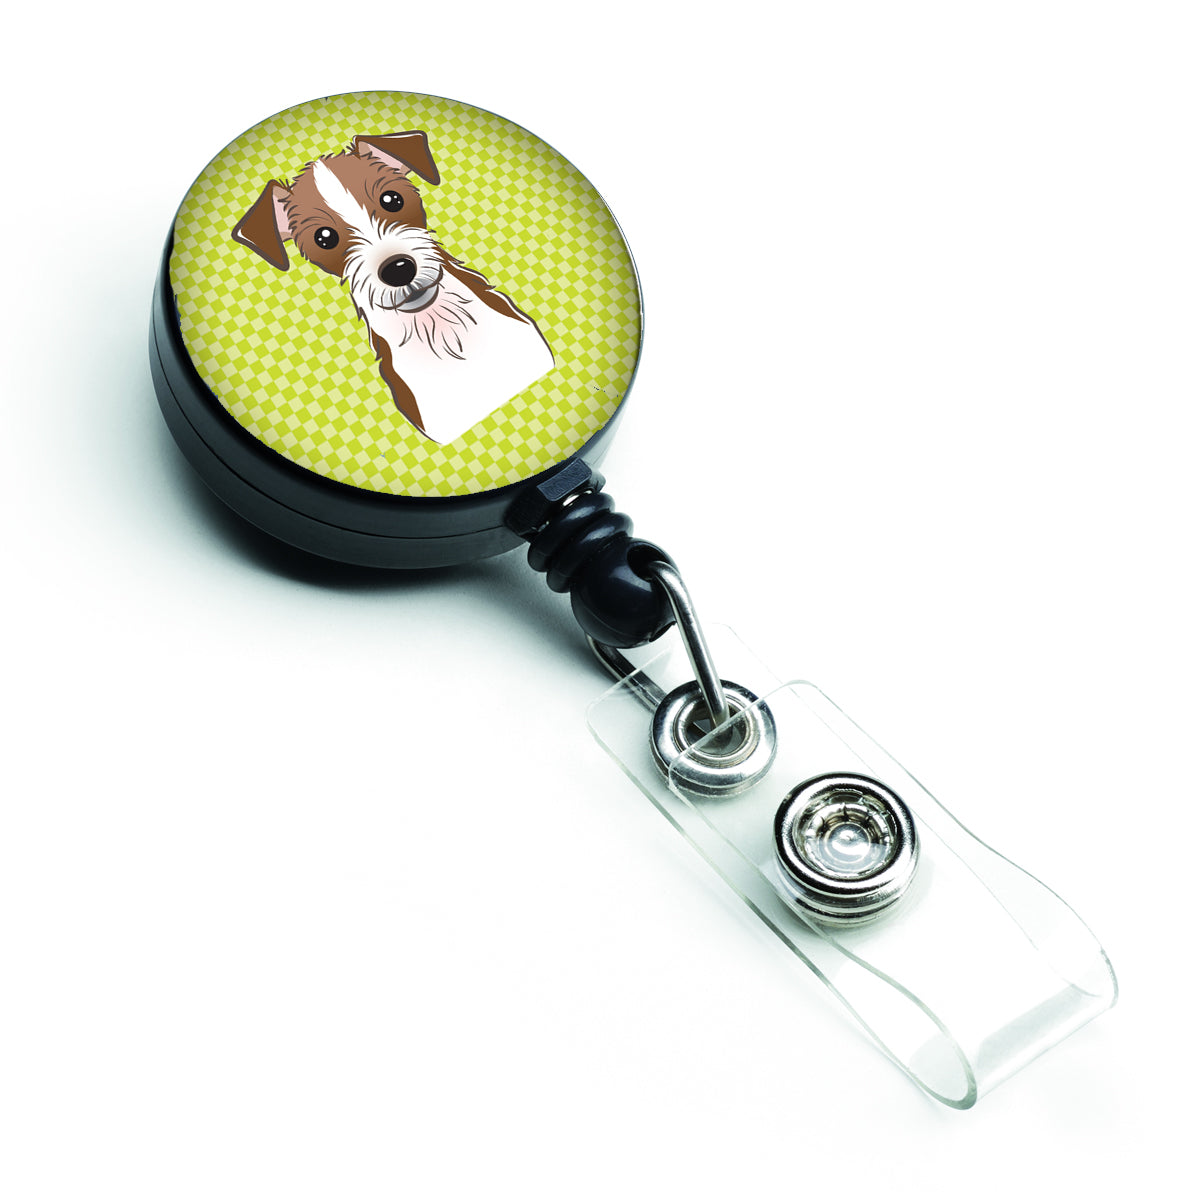 Bobine de badge rétractable Checkerboard vert citron Jack Russell Terrier BB1264BR